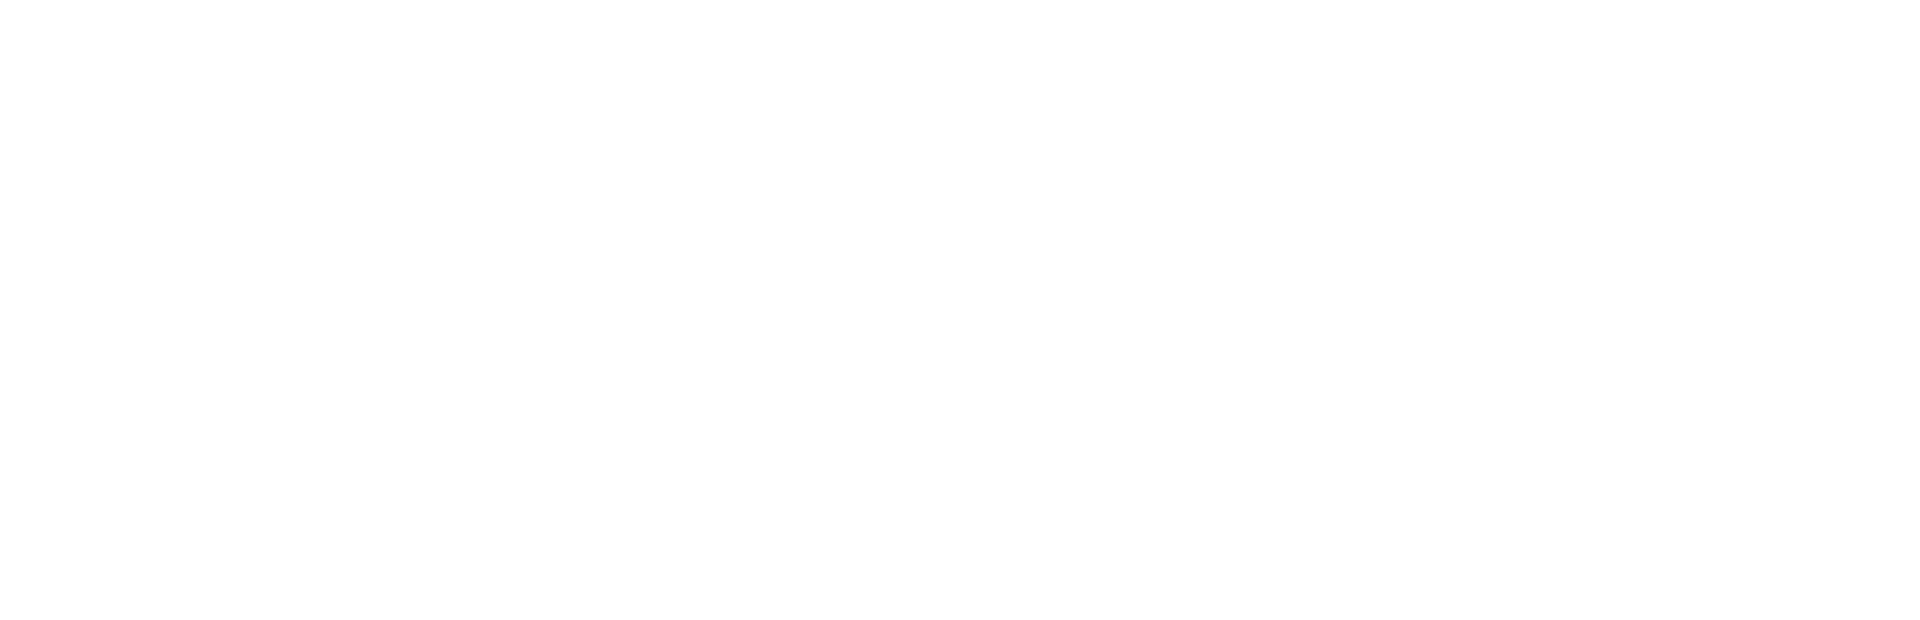 Santa Fe County NM, Glorieta NM, Pecos NM, Rowe NM, Ilfeld NM, San Jose NM, Serafina NM, Tecolote NM, Las Vegas NM, Cañoncito NM, Cañada de los Alamos NM, Santa Fe NM, Agua Fria NM, La Cienega NM, Algodones NM, Santa Ana Pueblo NM, Bernalillo NM, Rio Rancho NM, North Valley NM, Albuquerque NM, Interior Painting, Exterior Painting, Small Commercial, Staining, Women - Owned Painting Company, Painting, Interior Painting, Exterior Painting, Residential Painting, Mural Artist, Mural Painting, Staining, Deck Staining, Railing Staining, Cabinet Staining, Trim Staining, Specialty Painting, Furniture Painting, Furniture Staining, Furniture Oiling, Furniture Refurbishment, Small Commercial Painting, New Build Painting, New Construction Painting